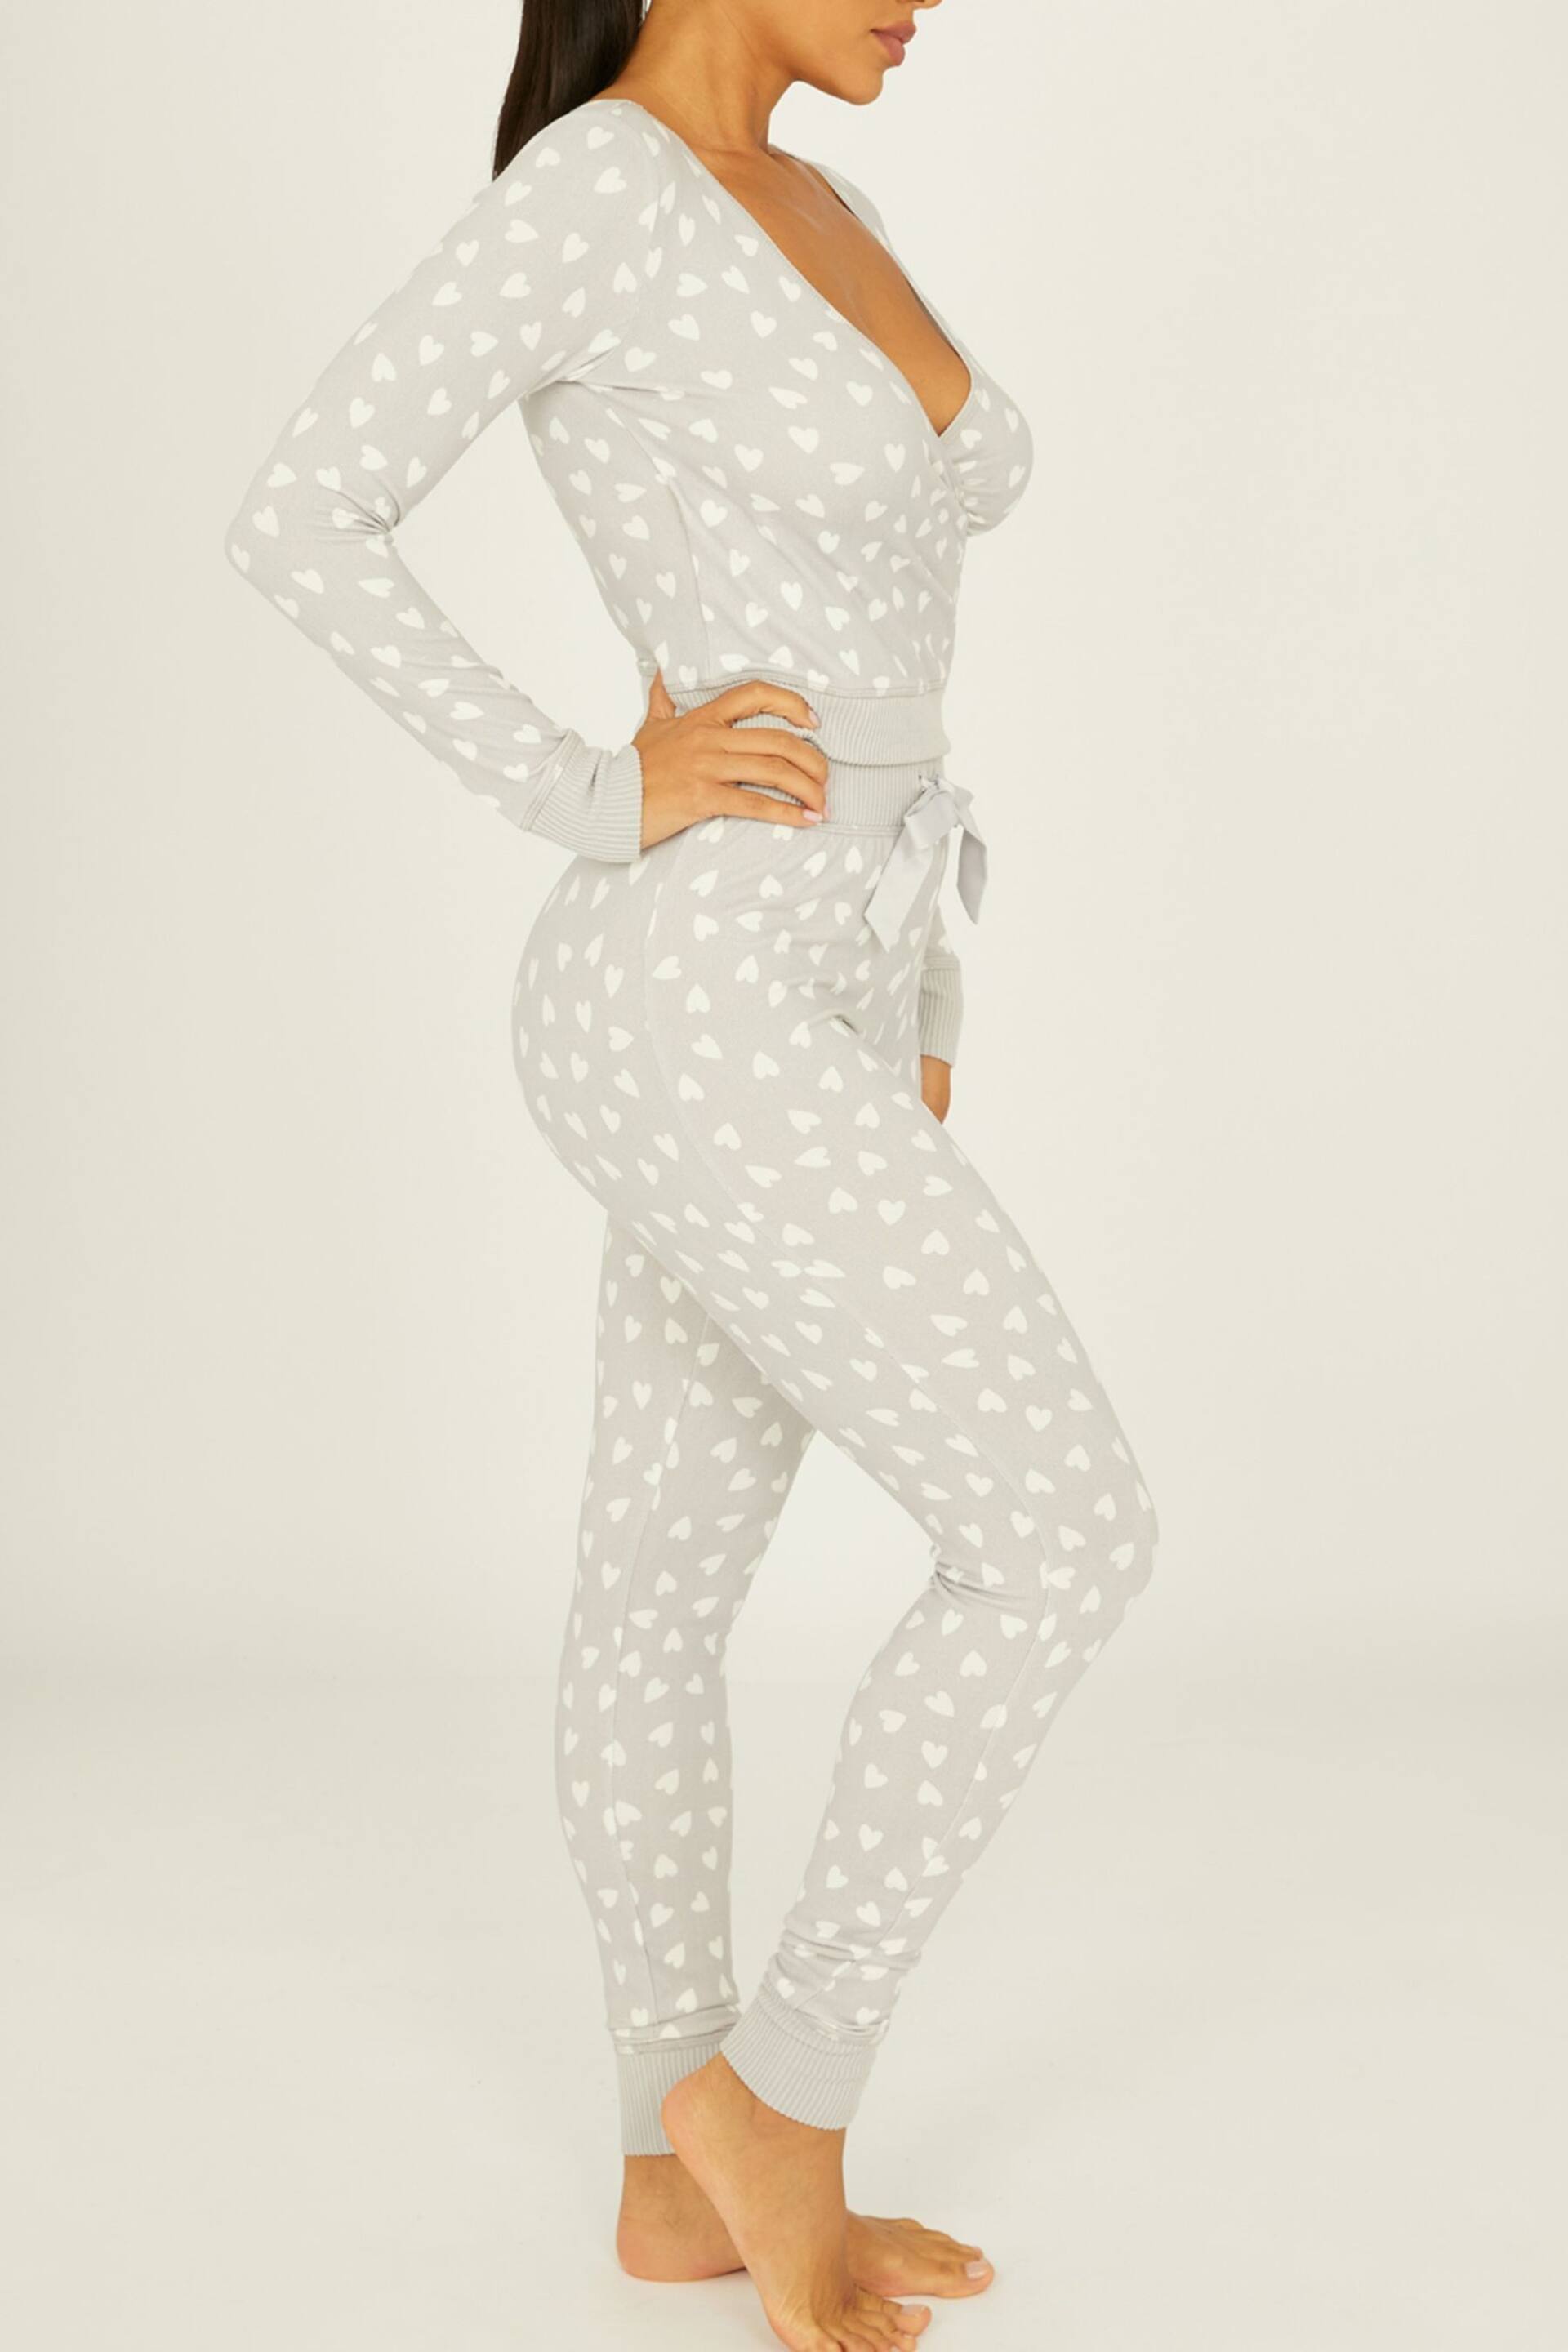 Boux Avenue Grey Heart Wrap Top And Legging Pyjama Set - Image 3 of 4